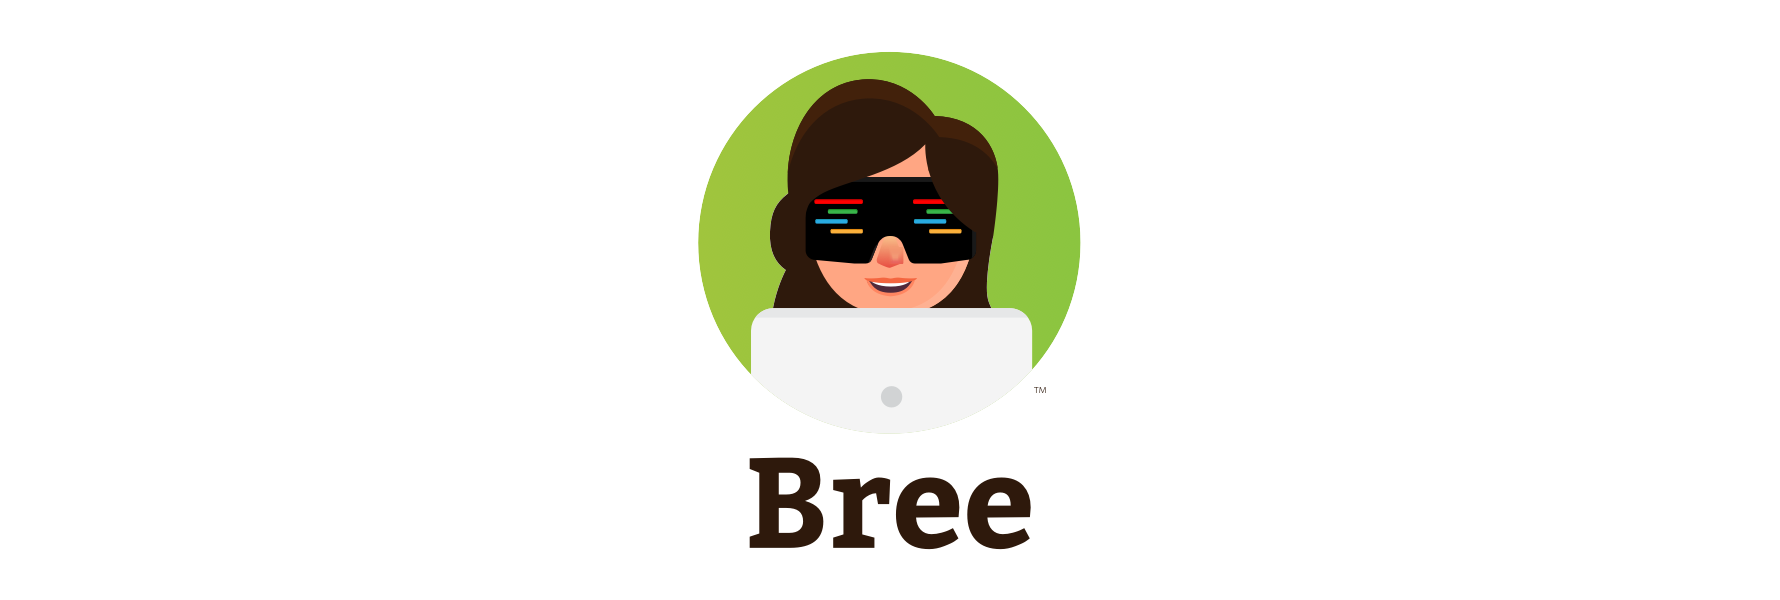 Screenshot of Bree logo